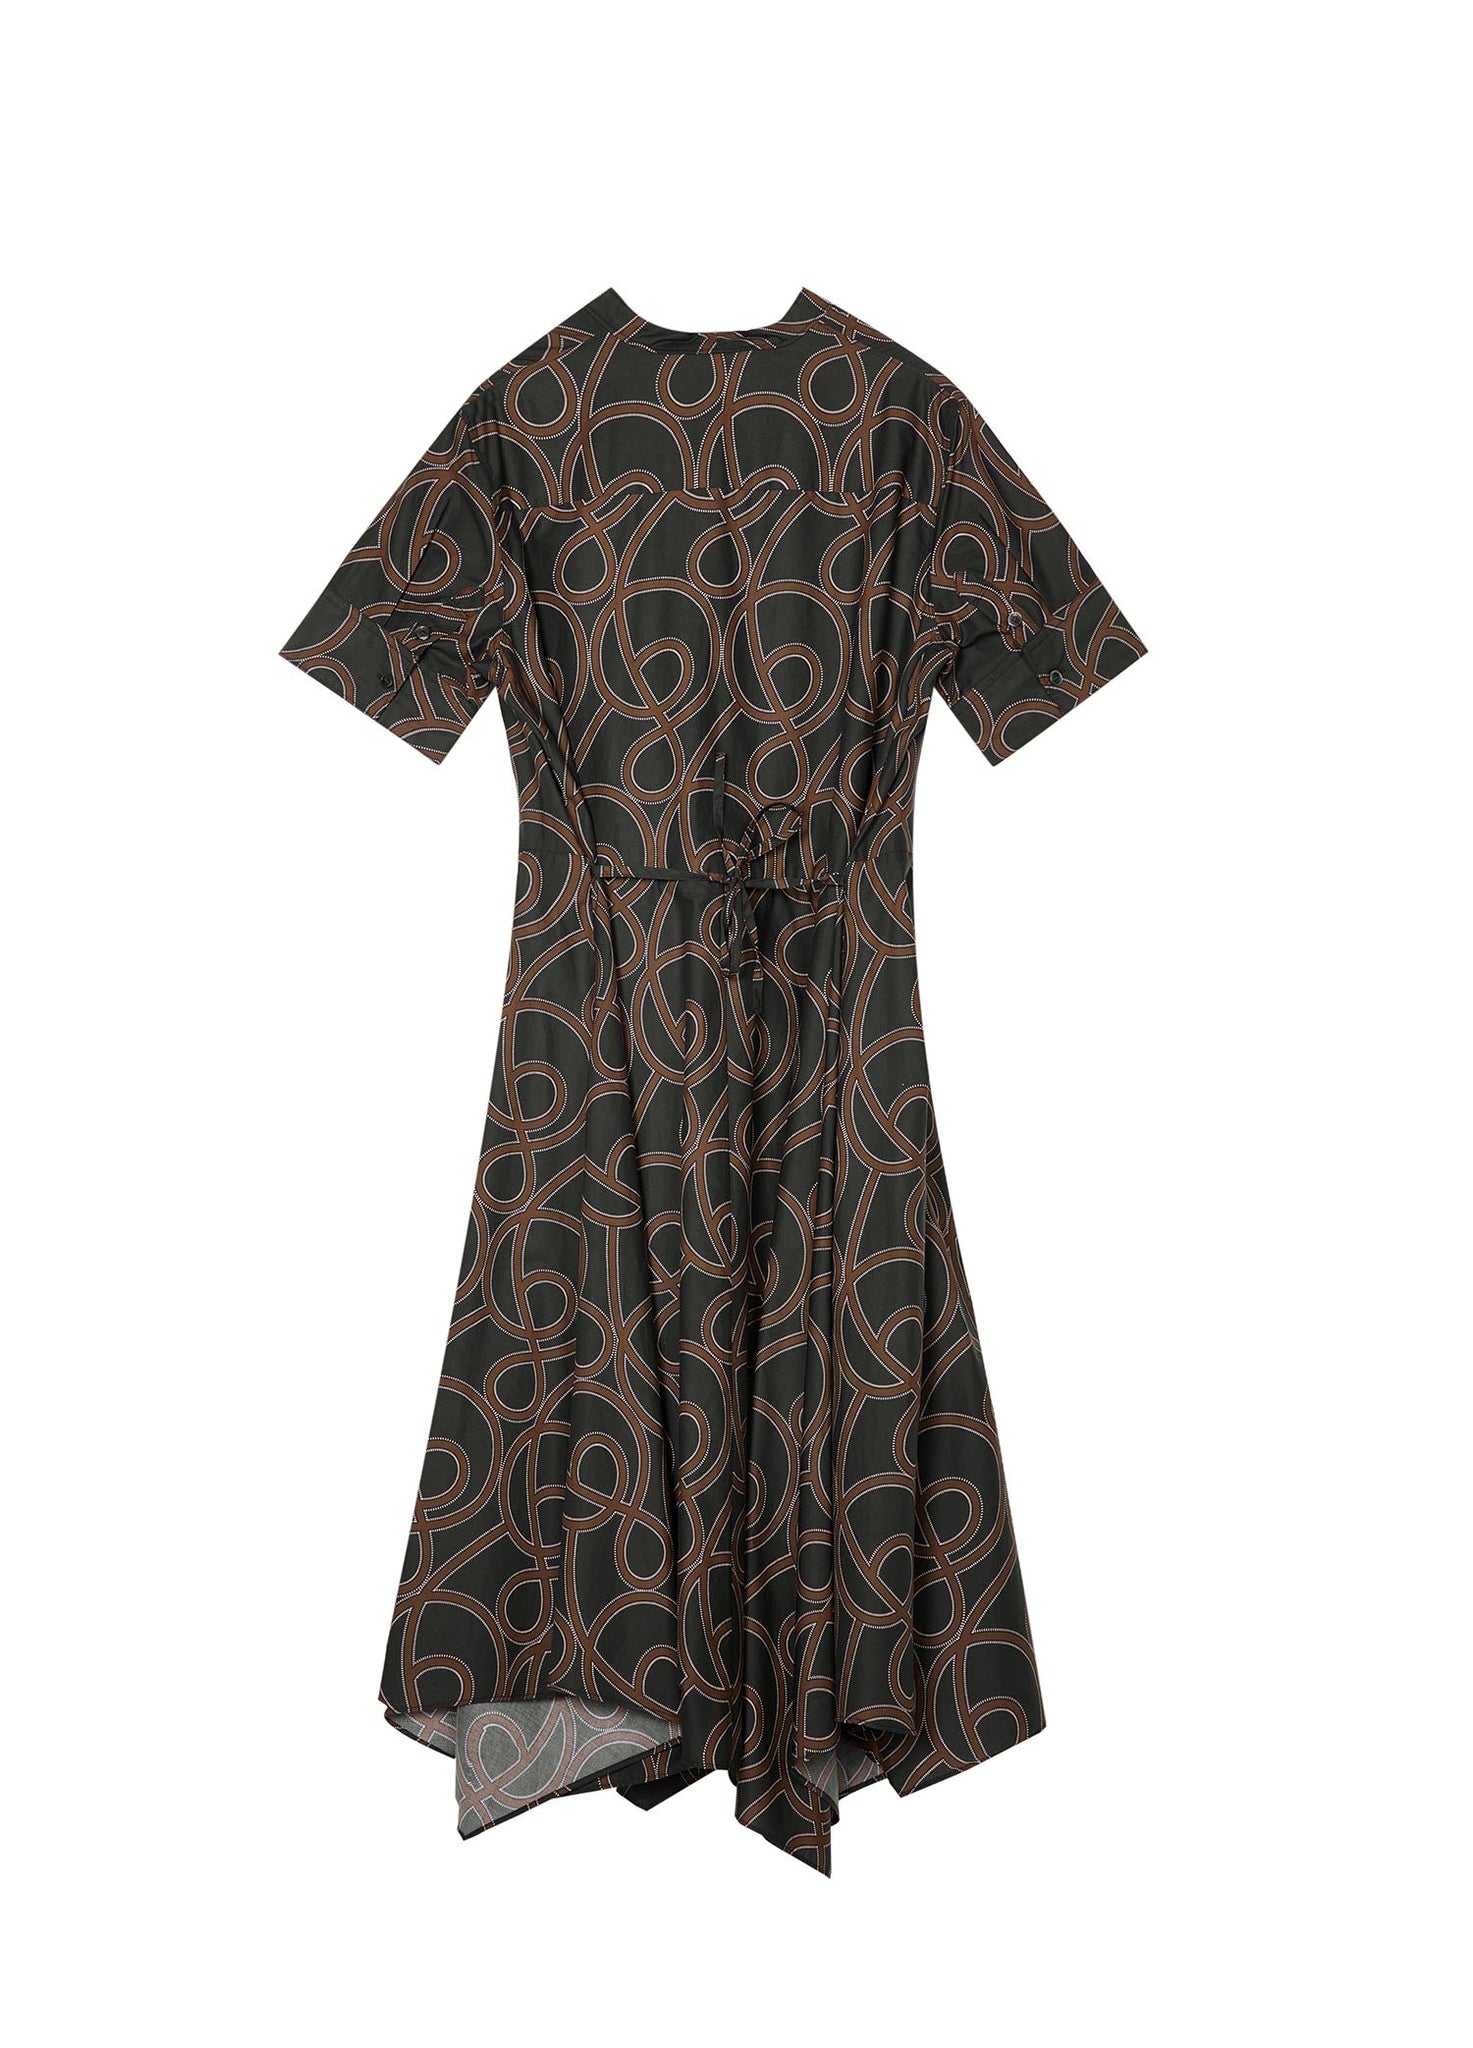 Dresses / JNBY Full Curved Line Print Short Sleeve Dress (100% Cotton)